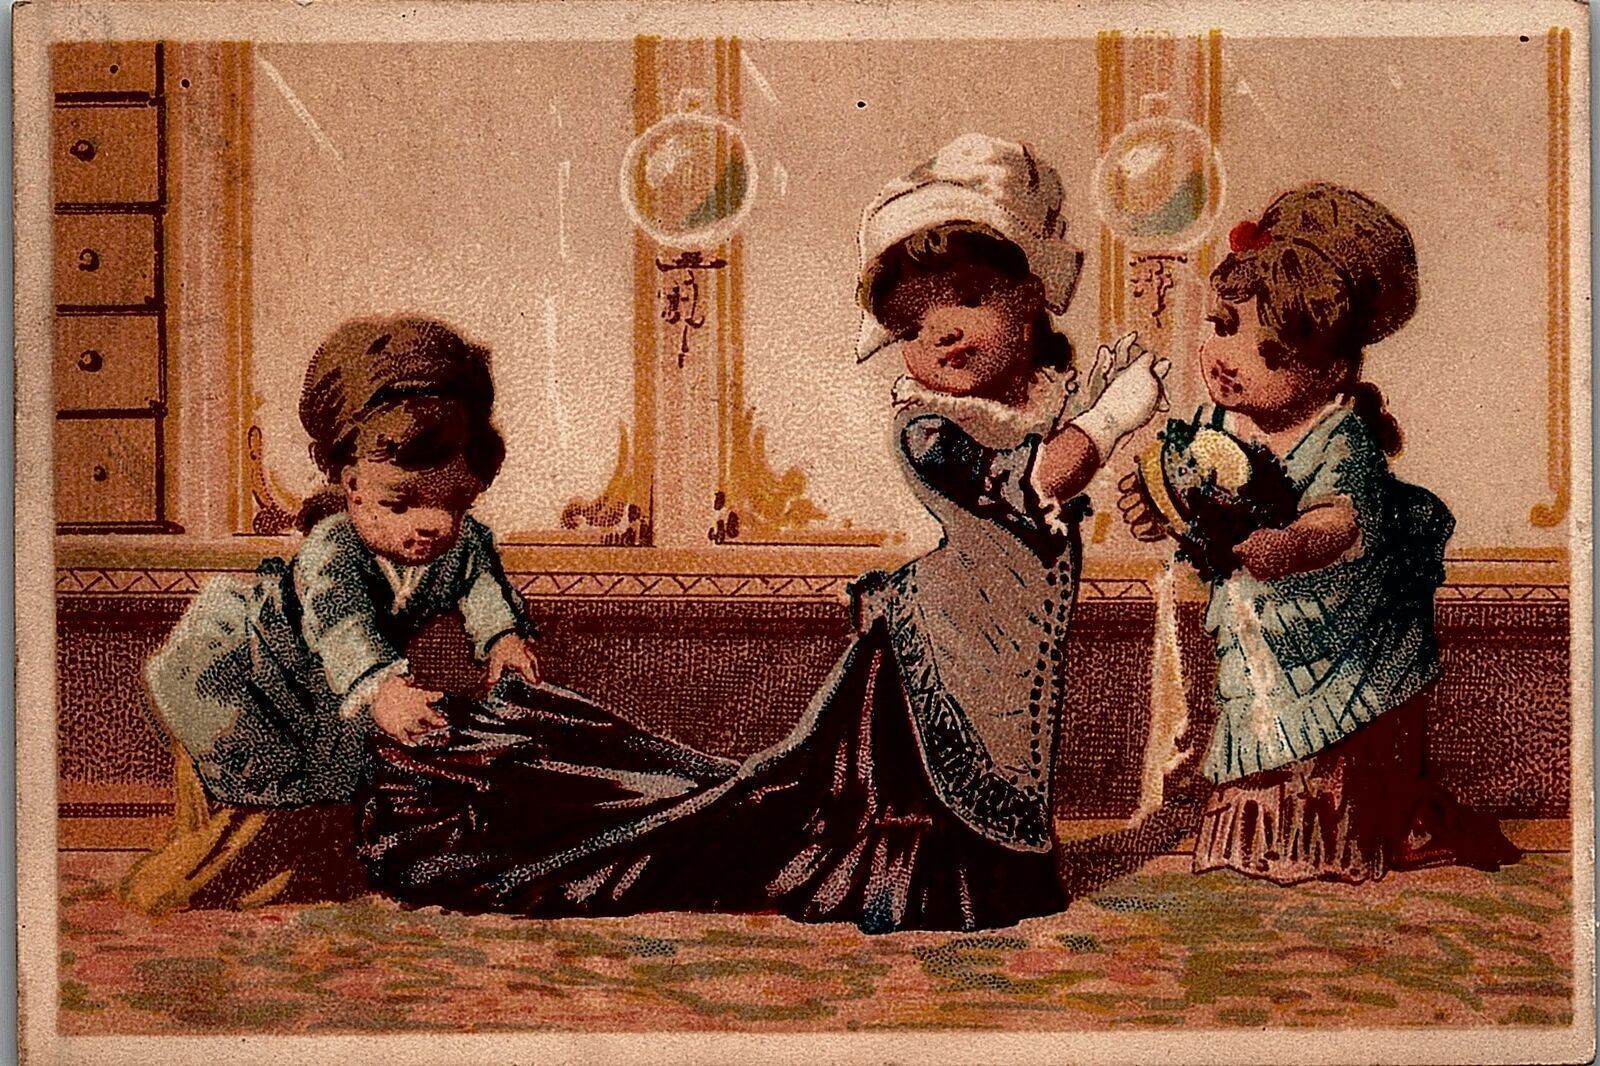 1880s VICTORIAN CHILDREN AS ADULTS SEAMSTRESS HEMING DRESS TRADE CARD 25-237